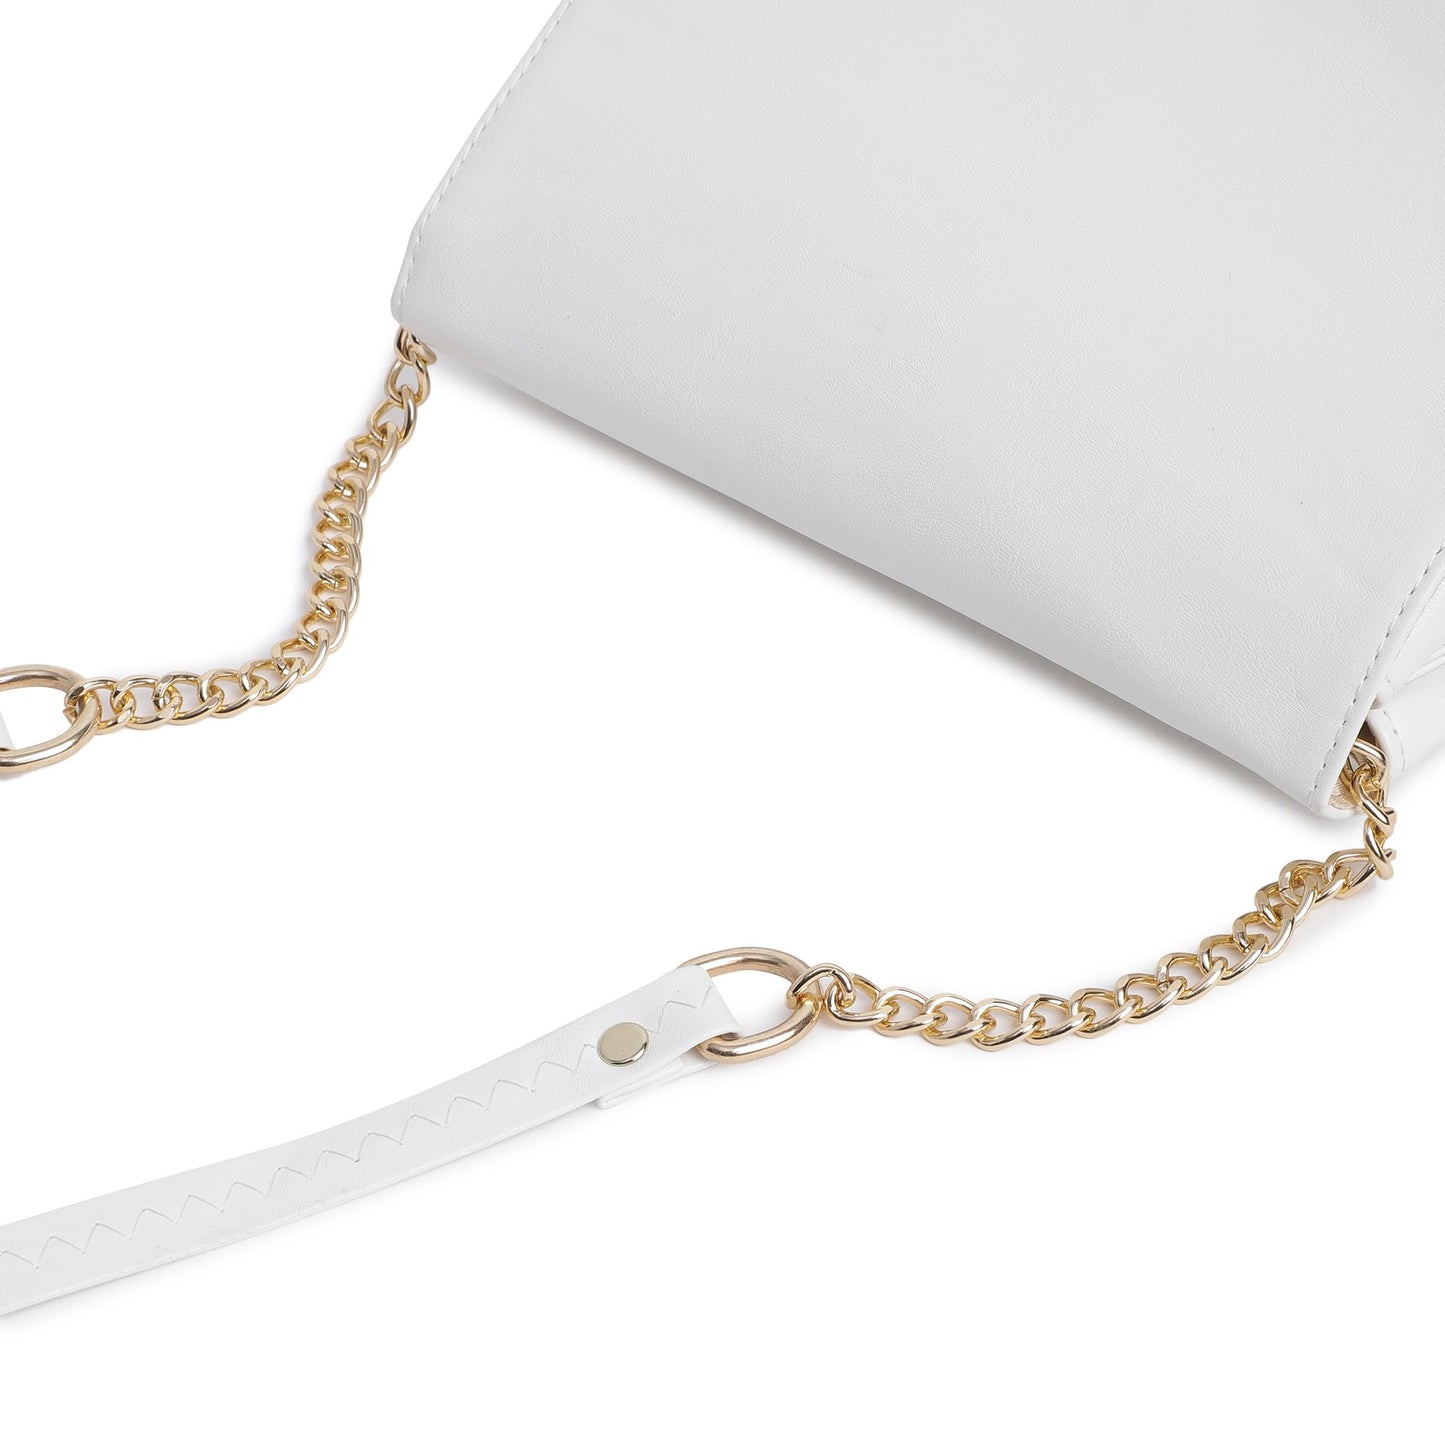 Fastrack Classic Envelope Sling Bag for Women | Stylish Crossbody Bag for Girls, Ladies, Women | Structured Handbag Made of Faux Leather (White)